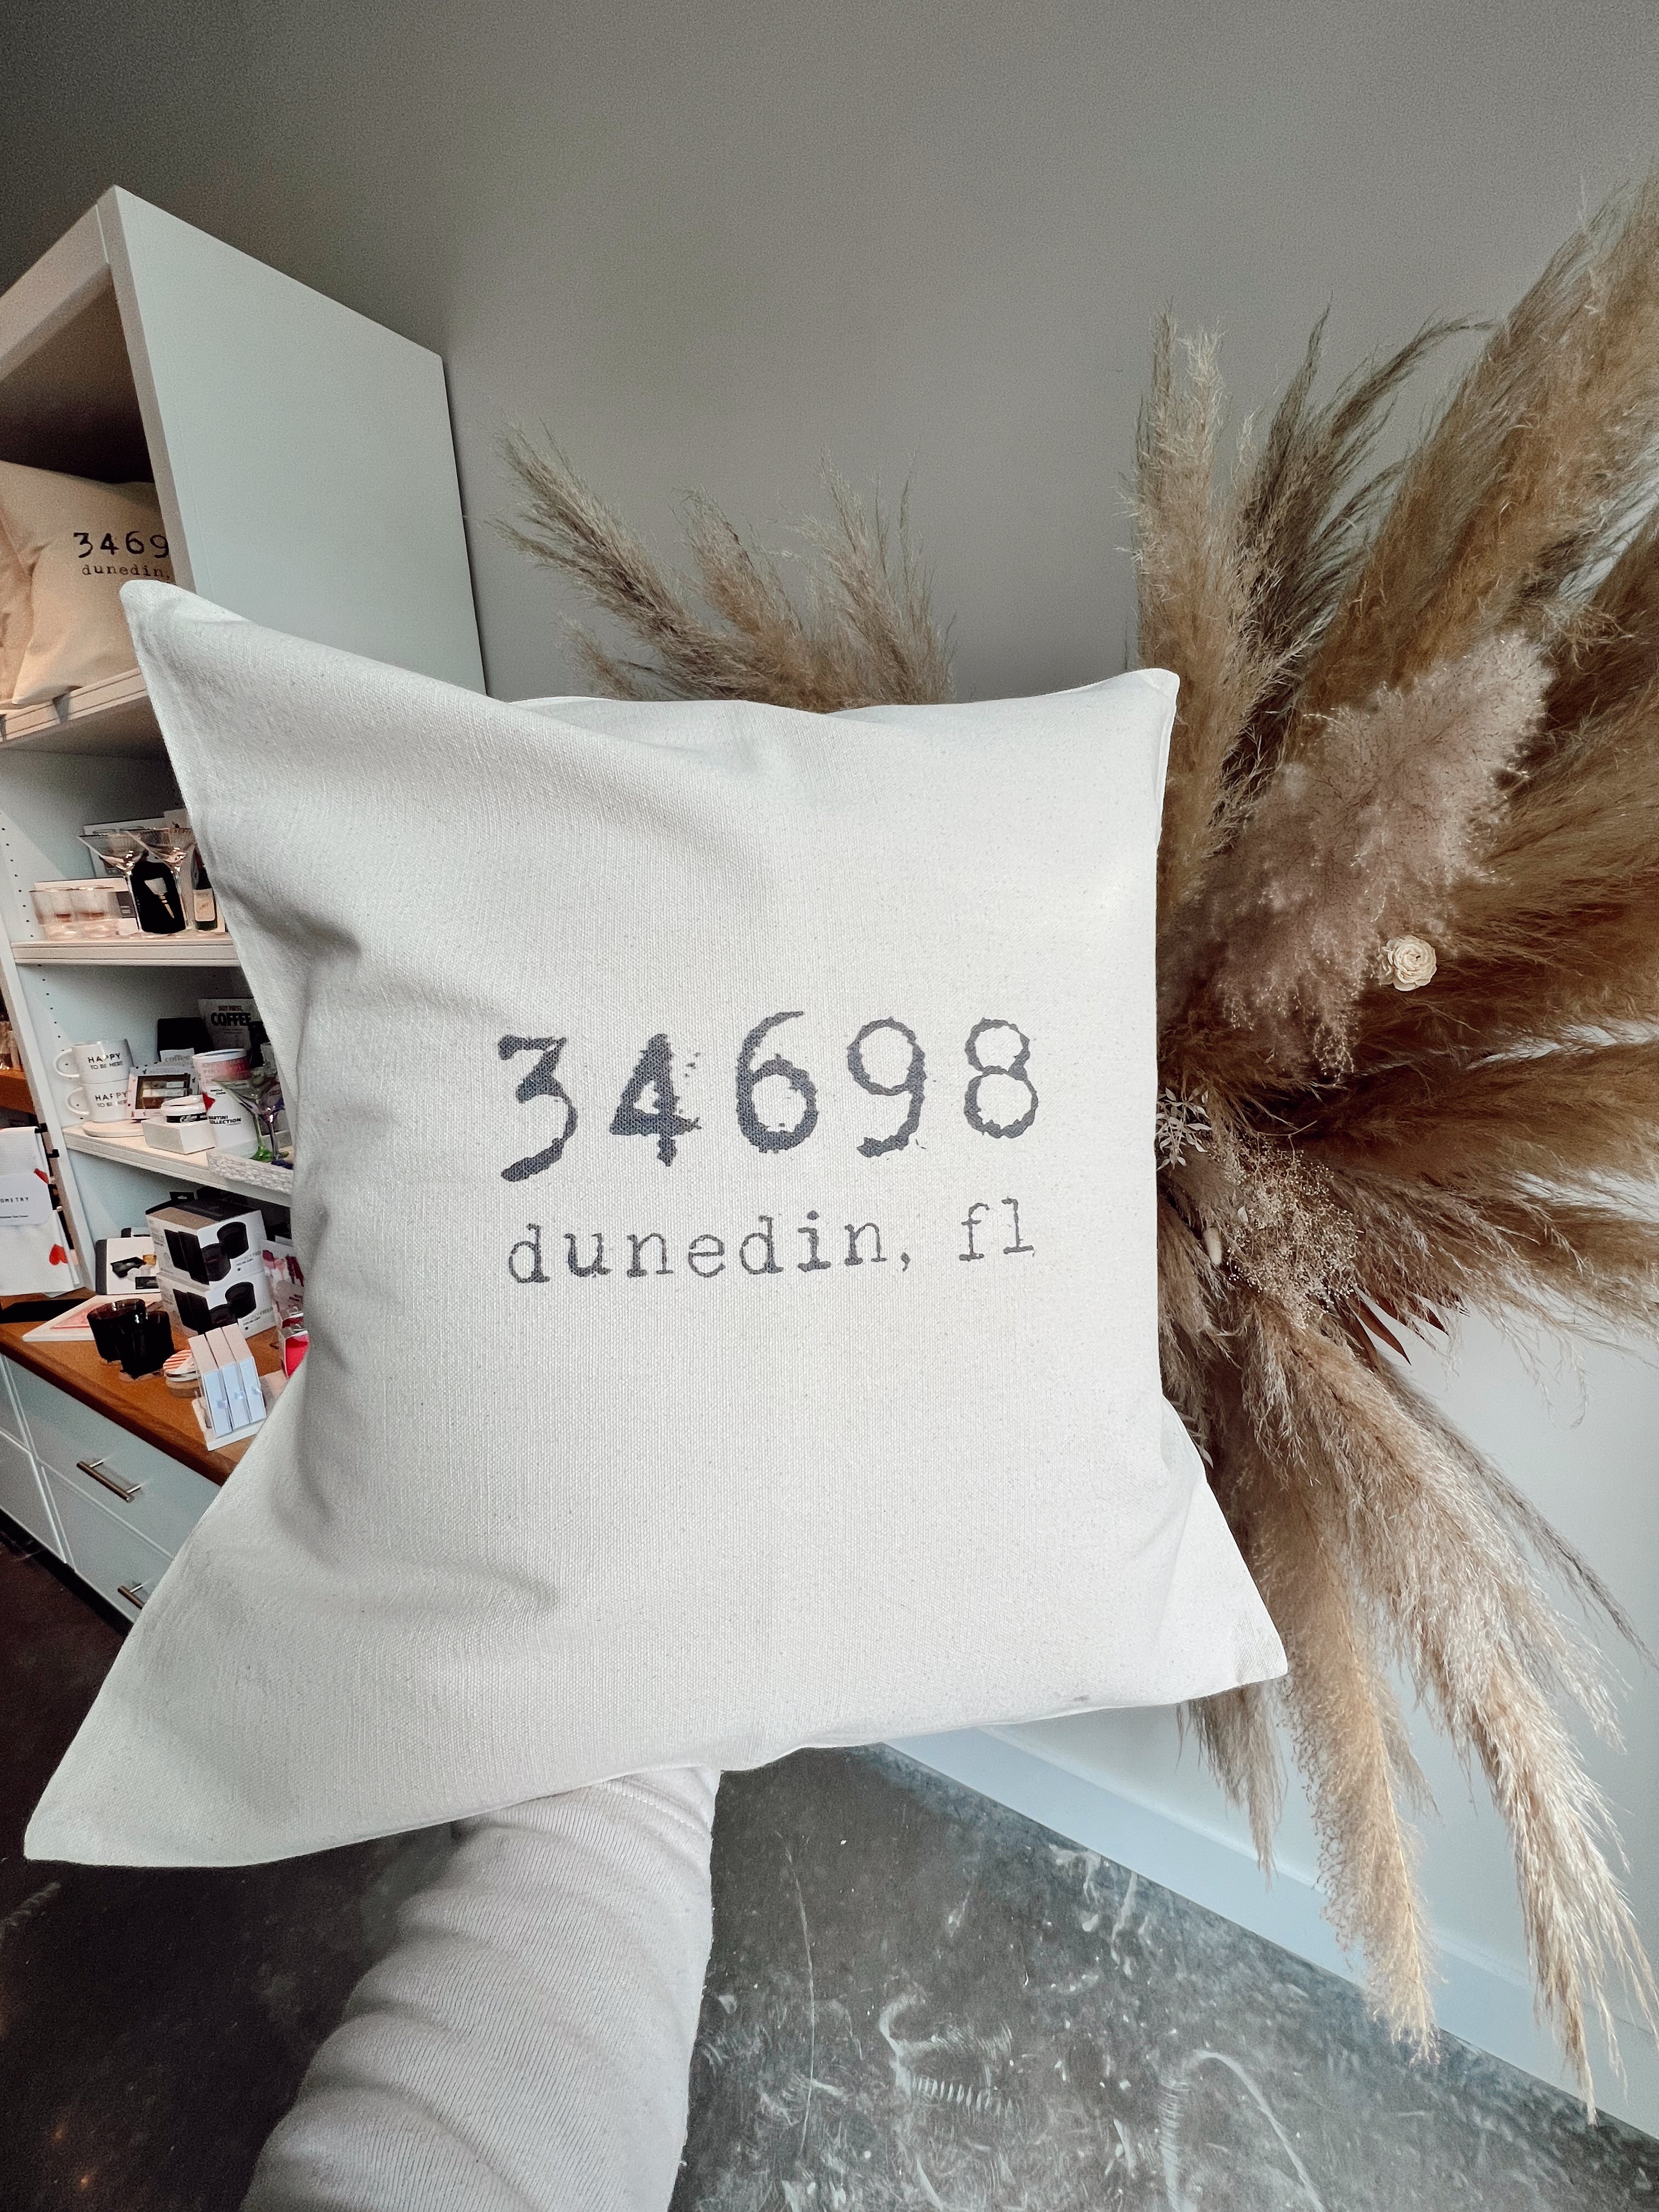 Dunedin Zipcode 34698 Square Canvas Pillow